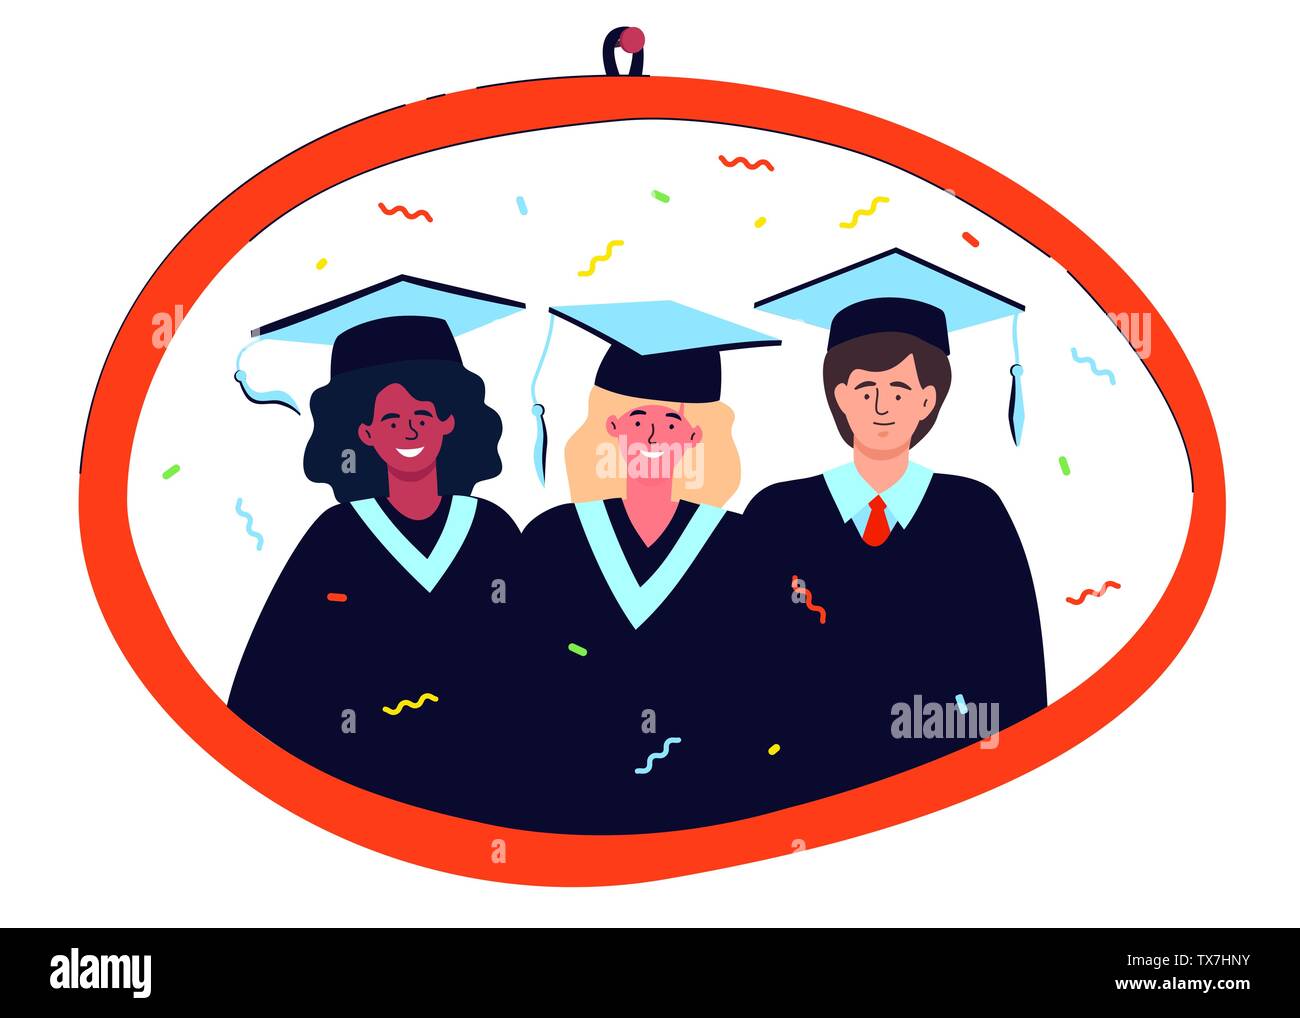 Graduation photo - colorful flat design style illustration Stock Vector